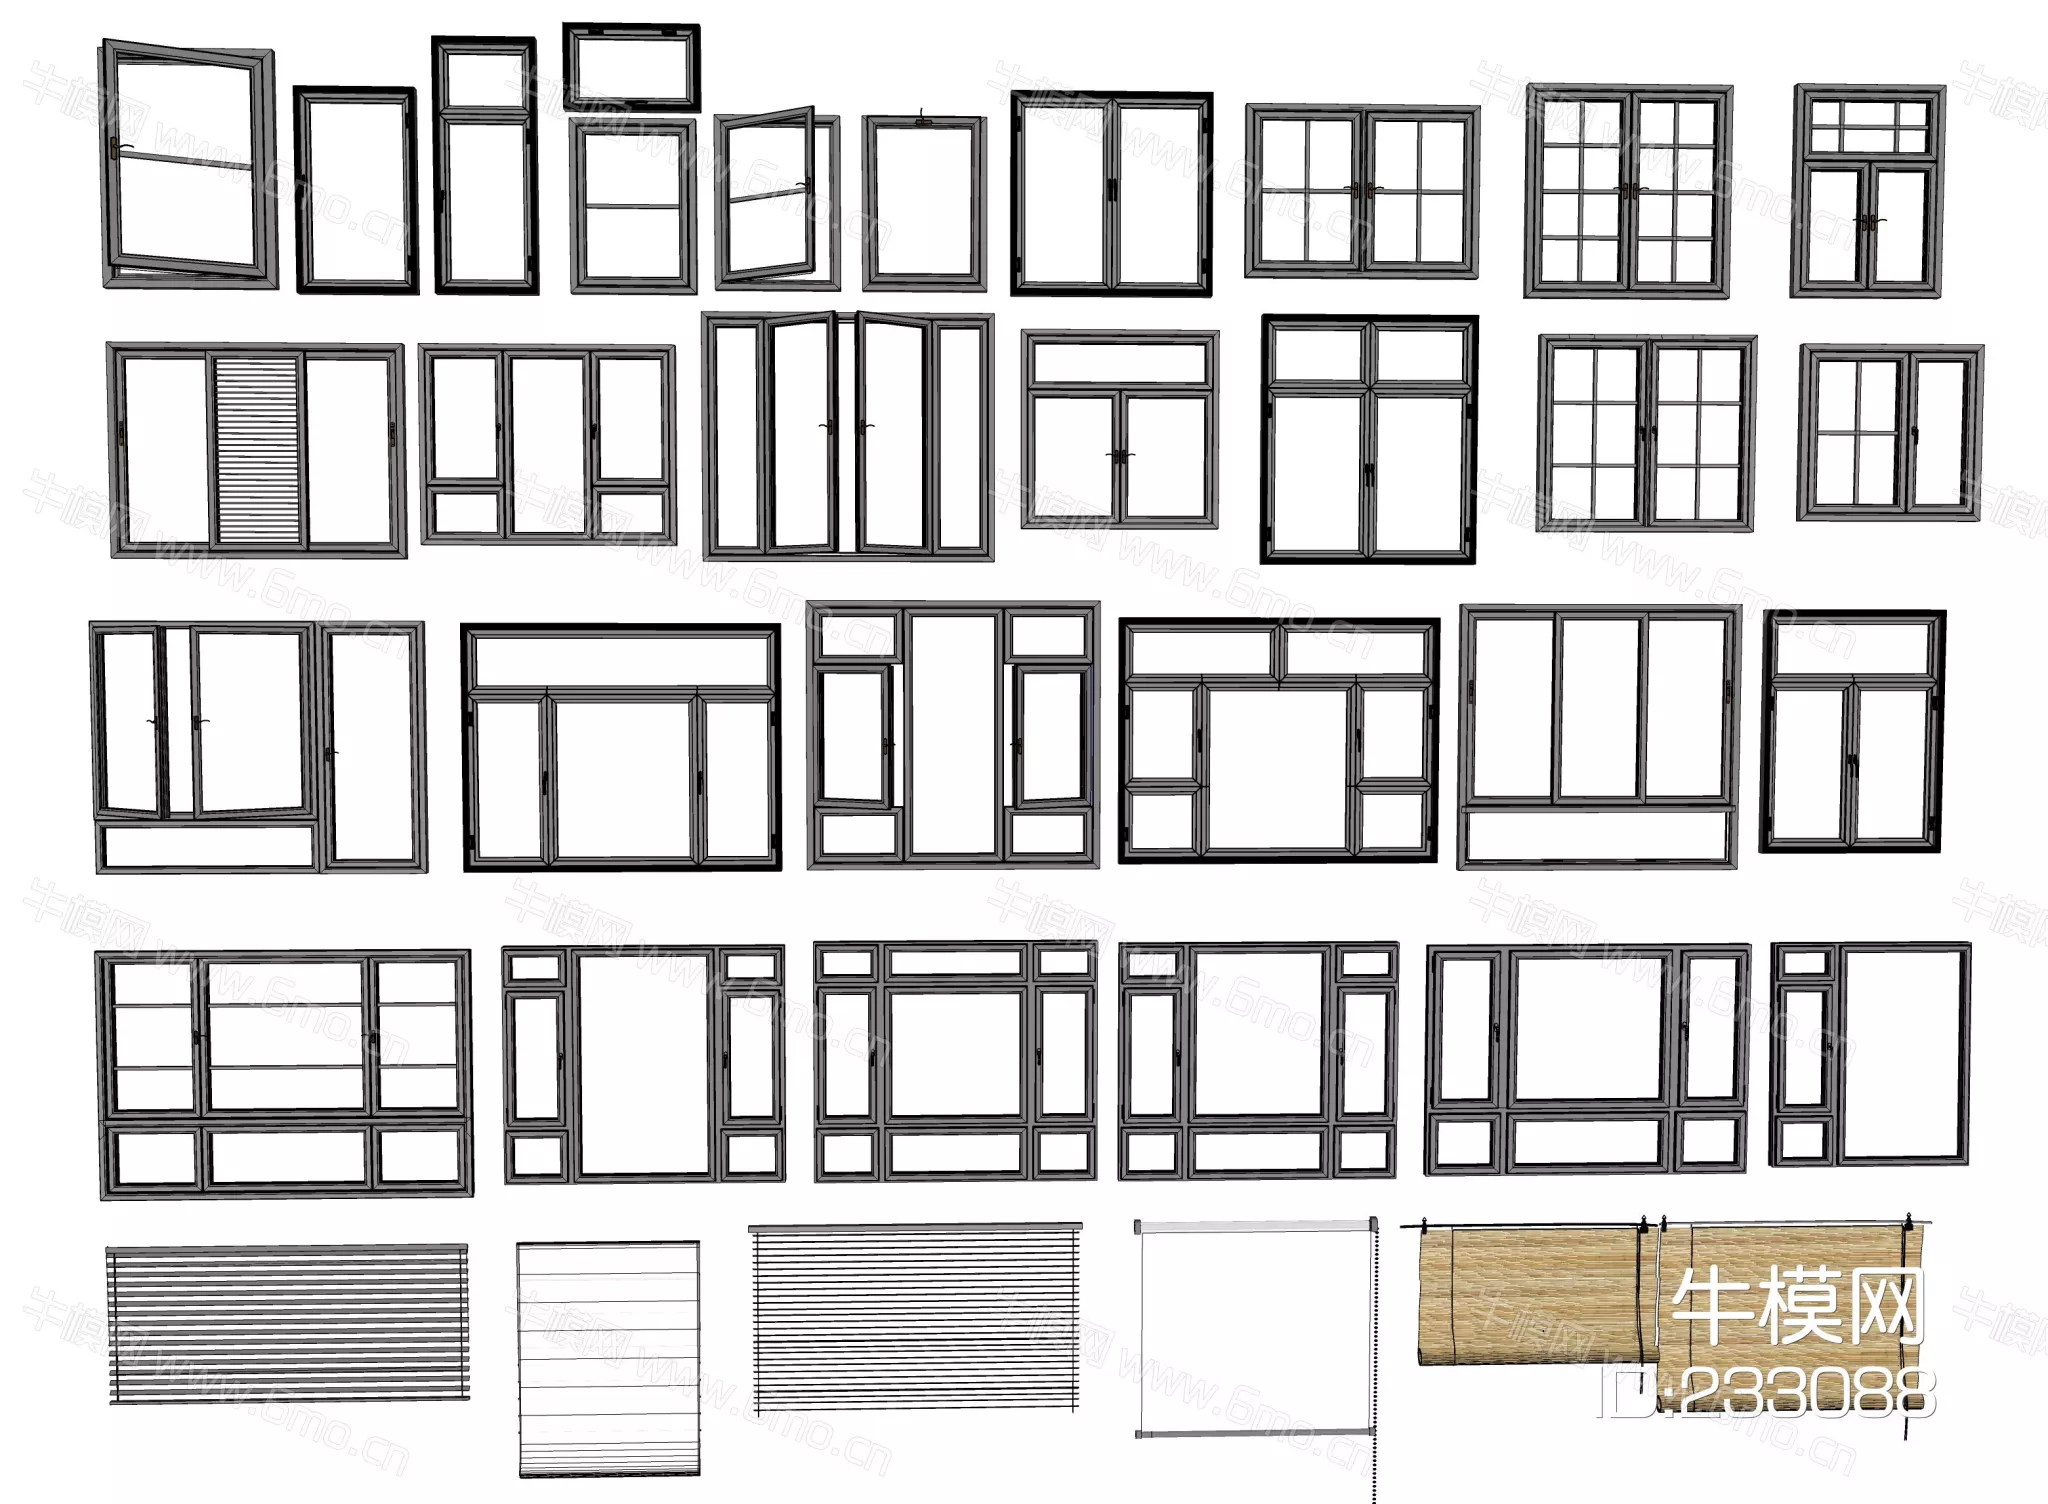 MODERN DOOR AND WINDOWS - SKETCHUP 3D MODEL - ENSCAPE - 233088